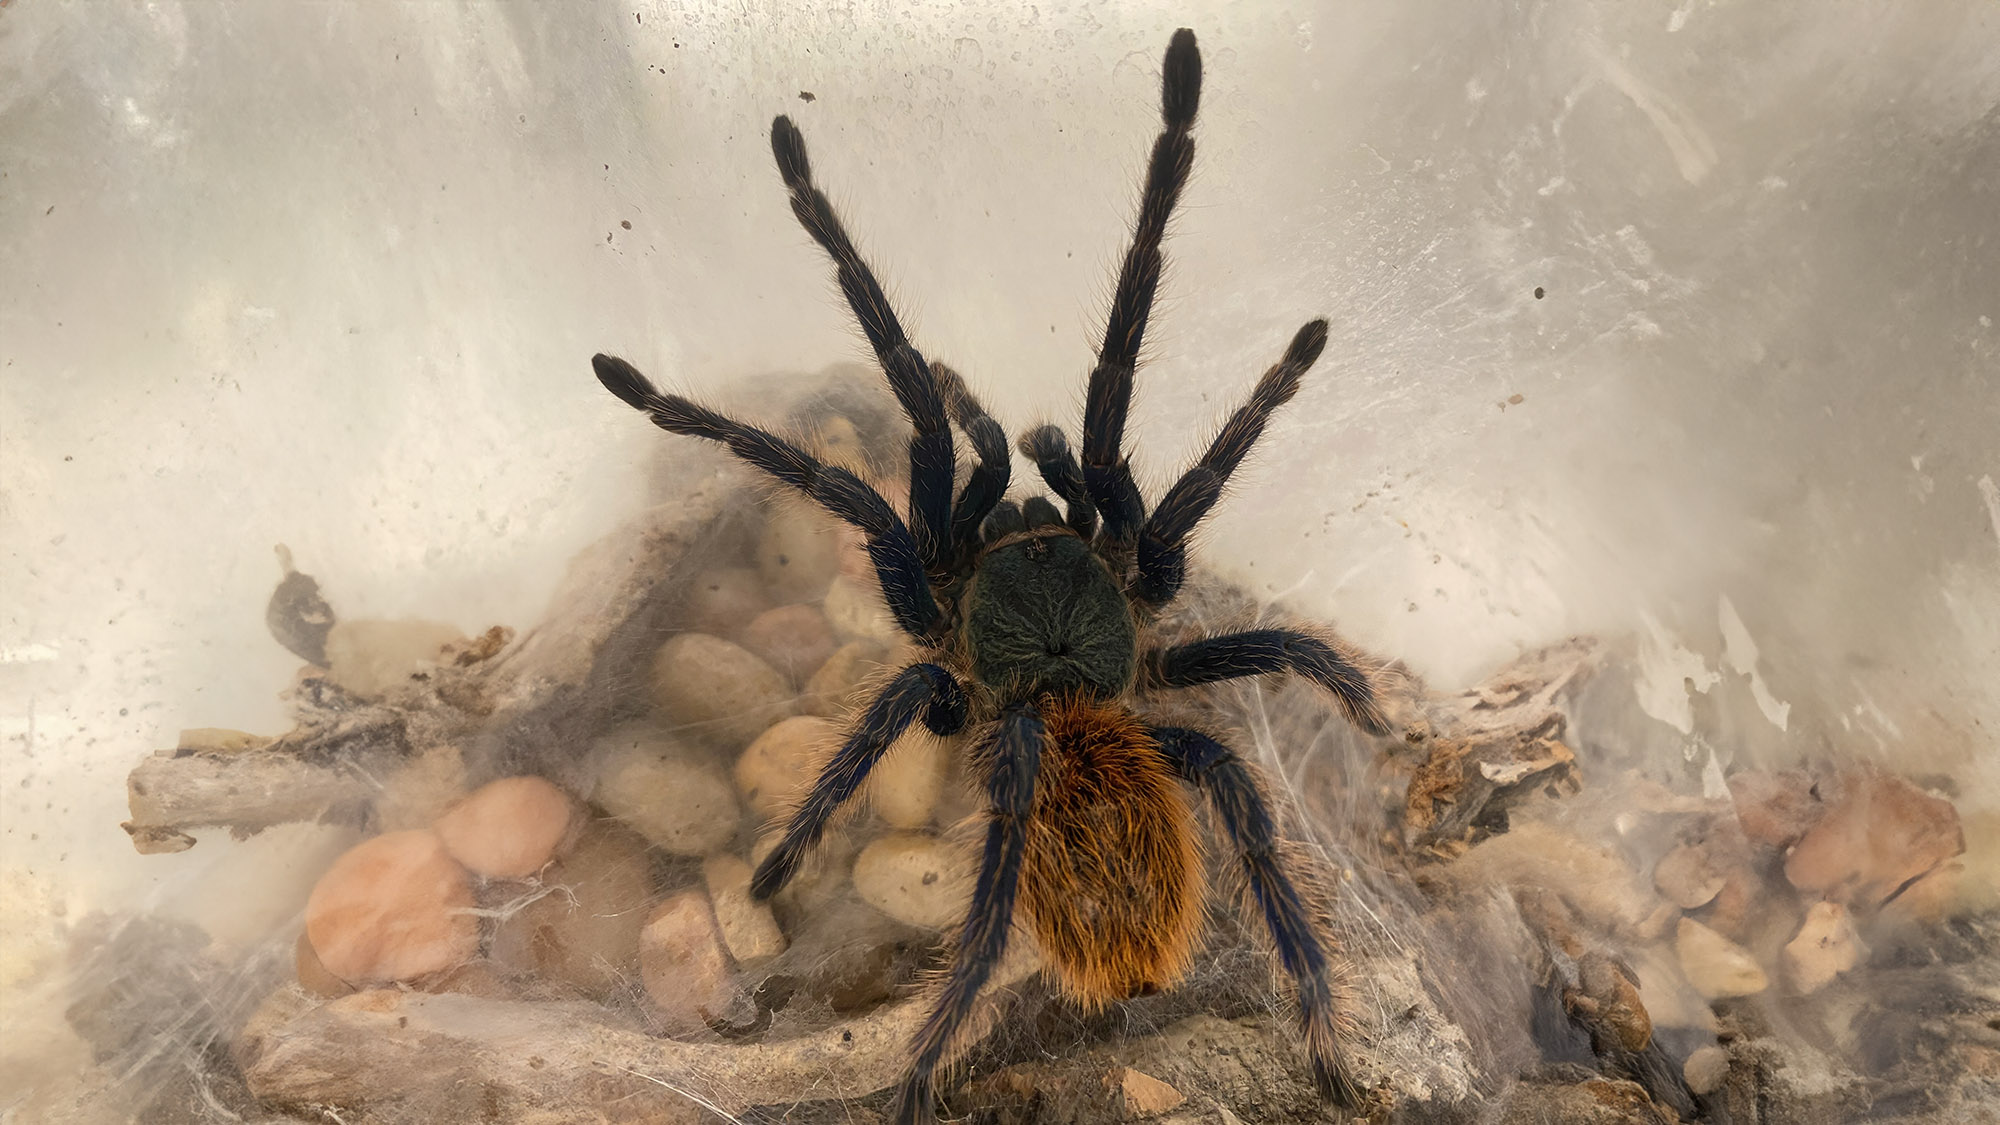 Photo of our green bottle tarantula, Glenn, in his enclosure.